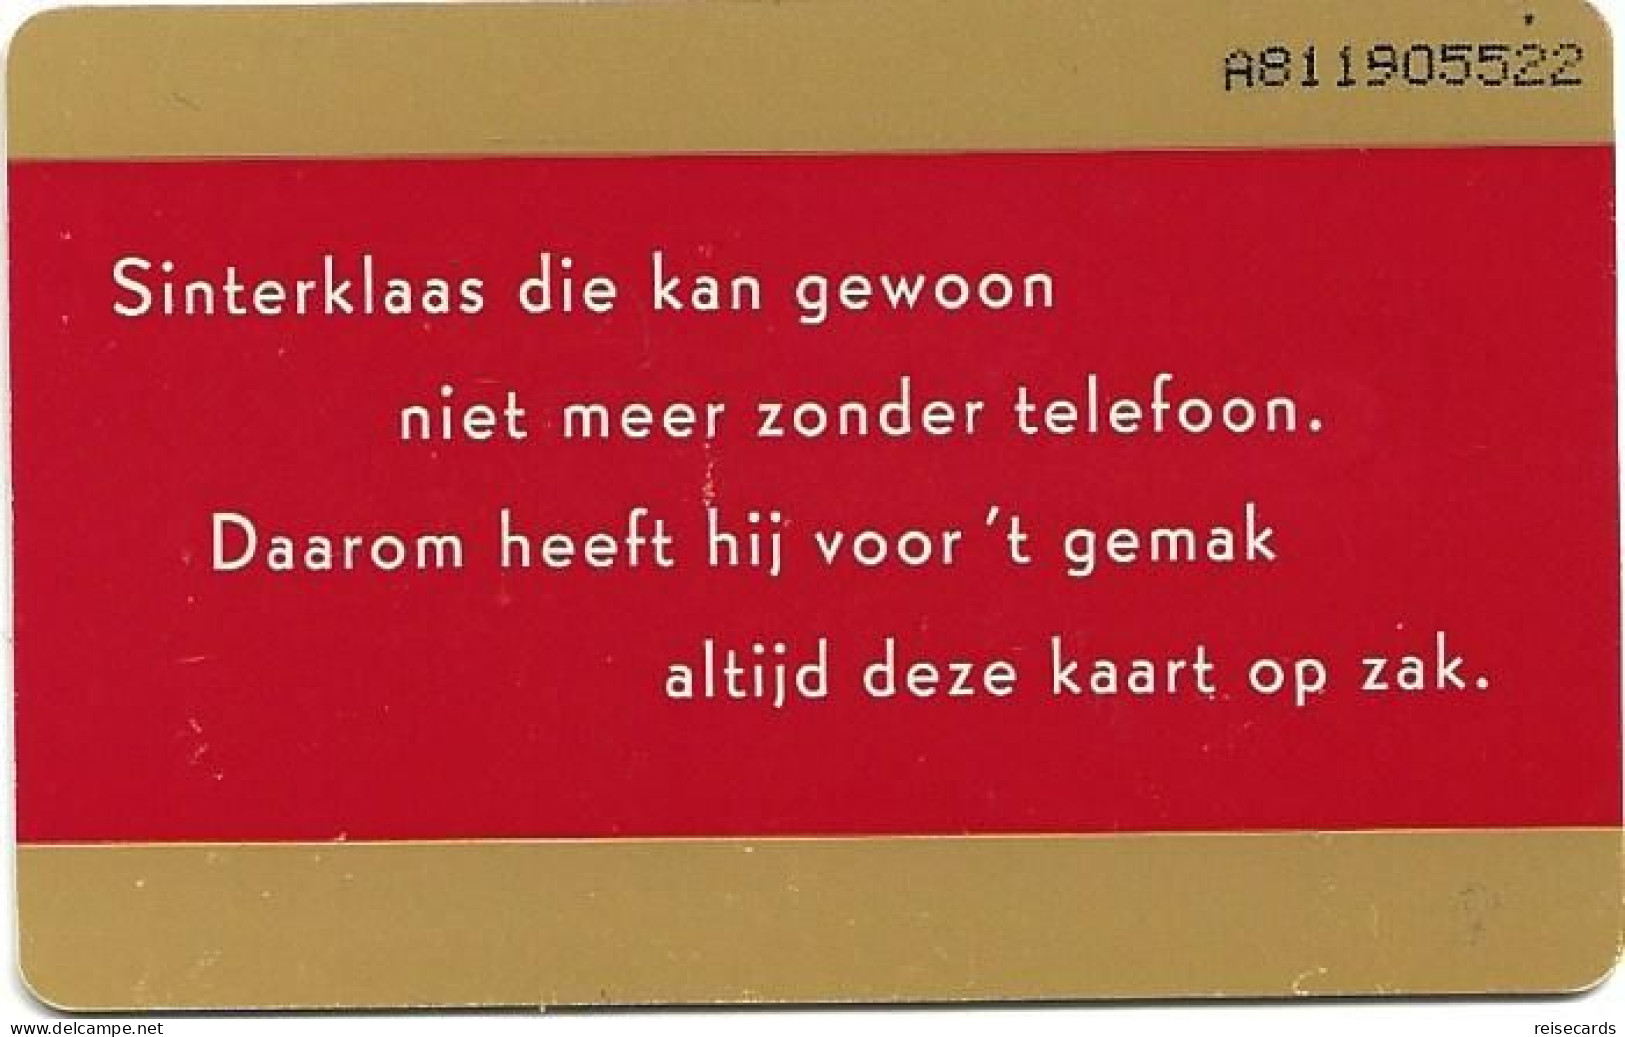 Netherlands: Ptt Telecom - 1996 Sinterklaas - Públicas